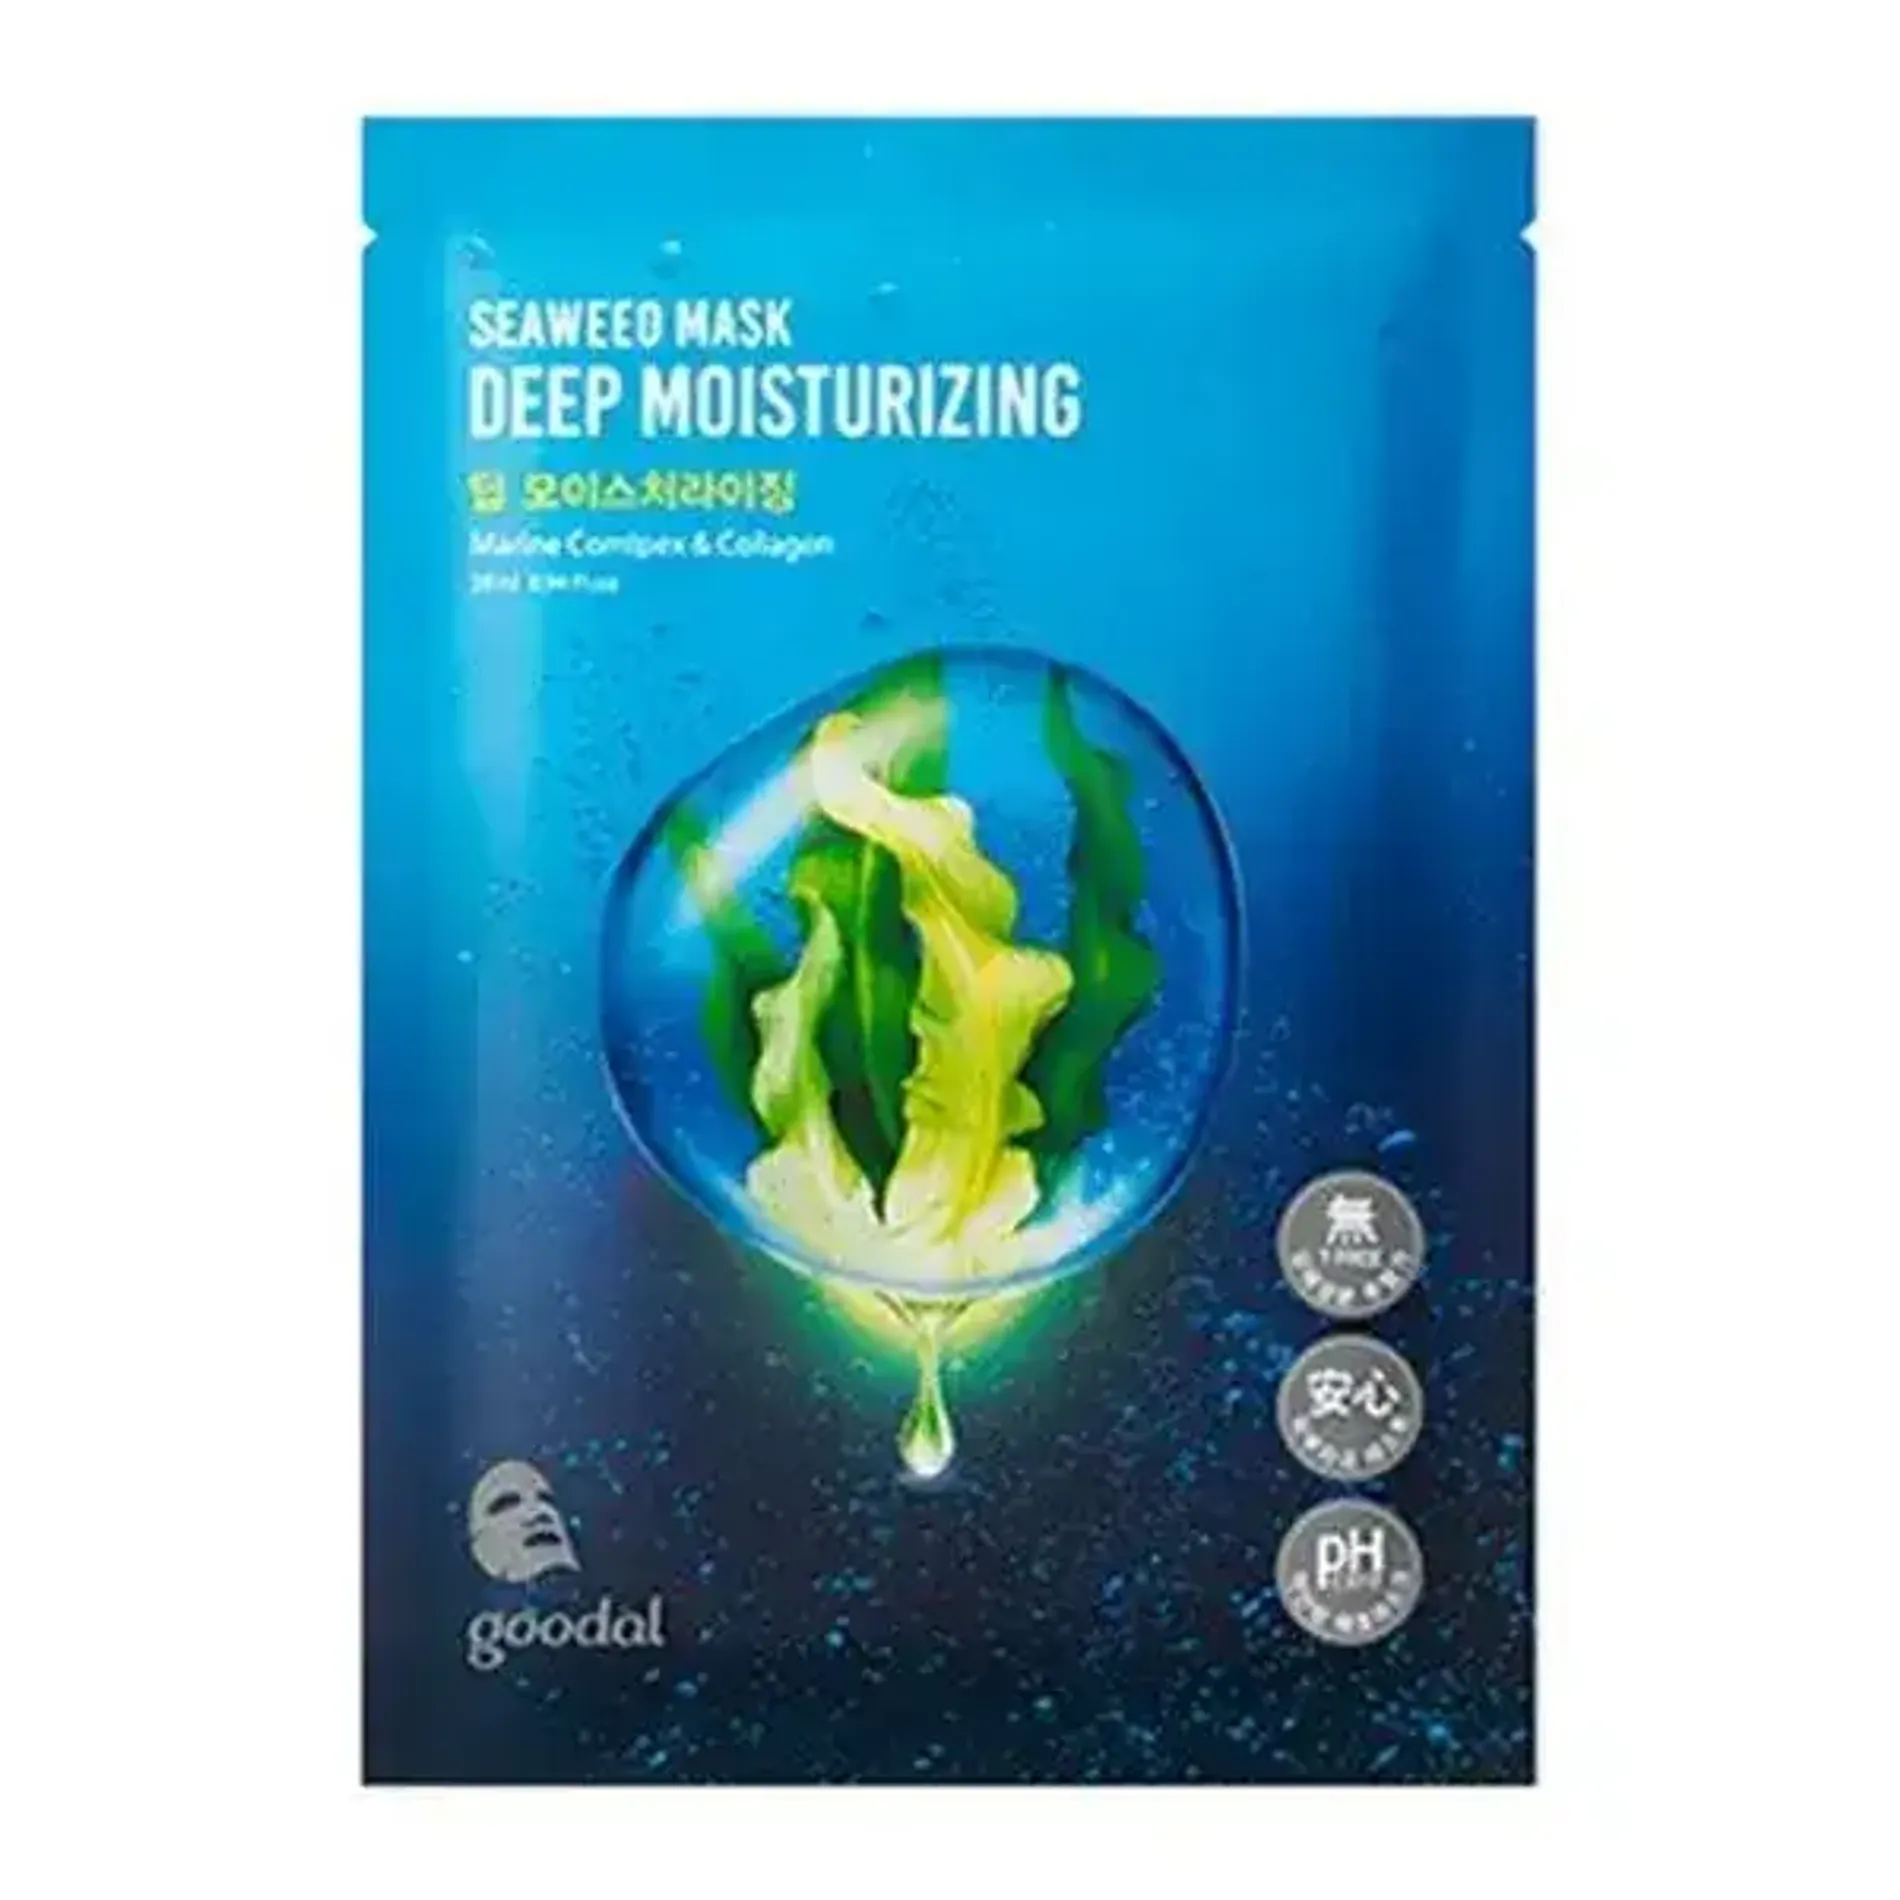 mat-na-goodal-seaweed-deep-moisturizing-mask-marine-comp-lex-collagen-1